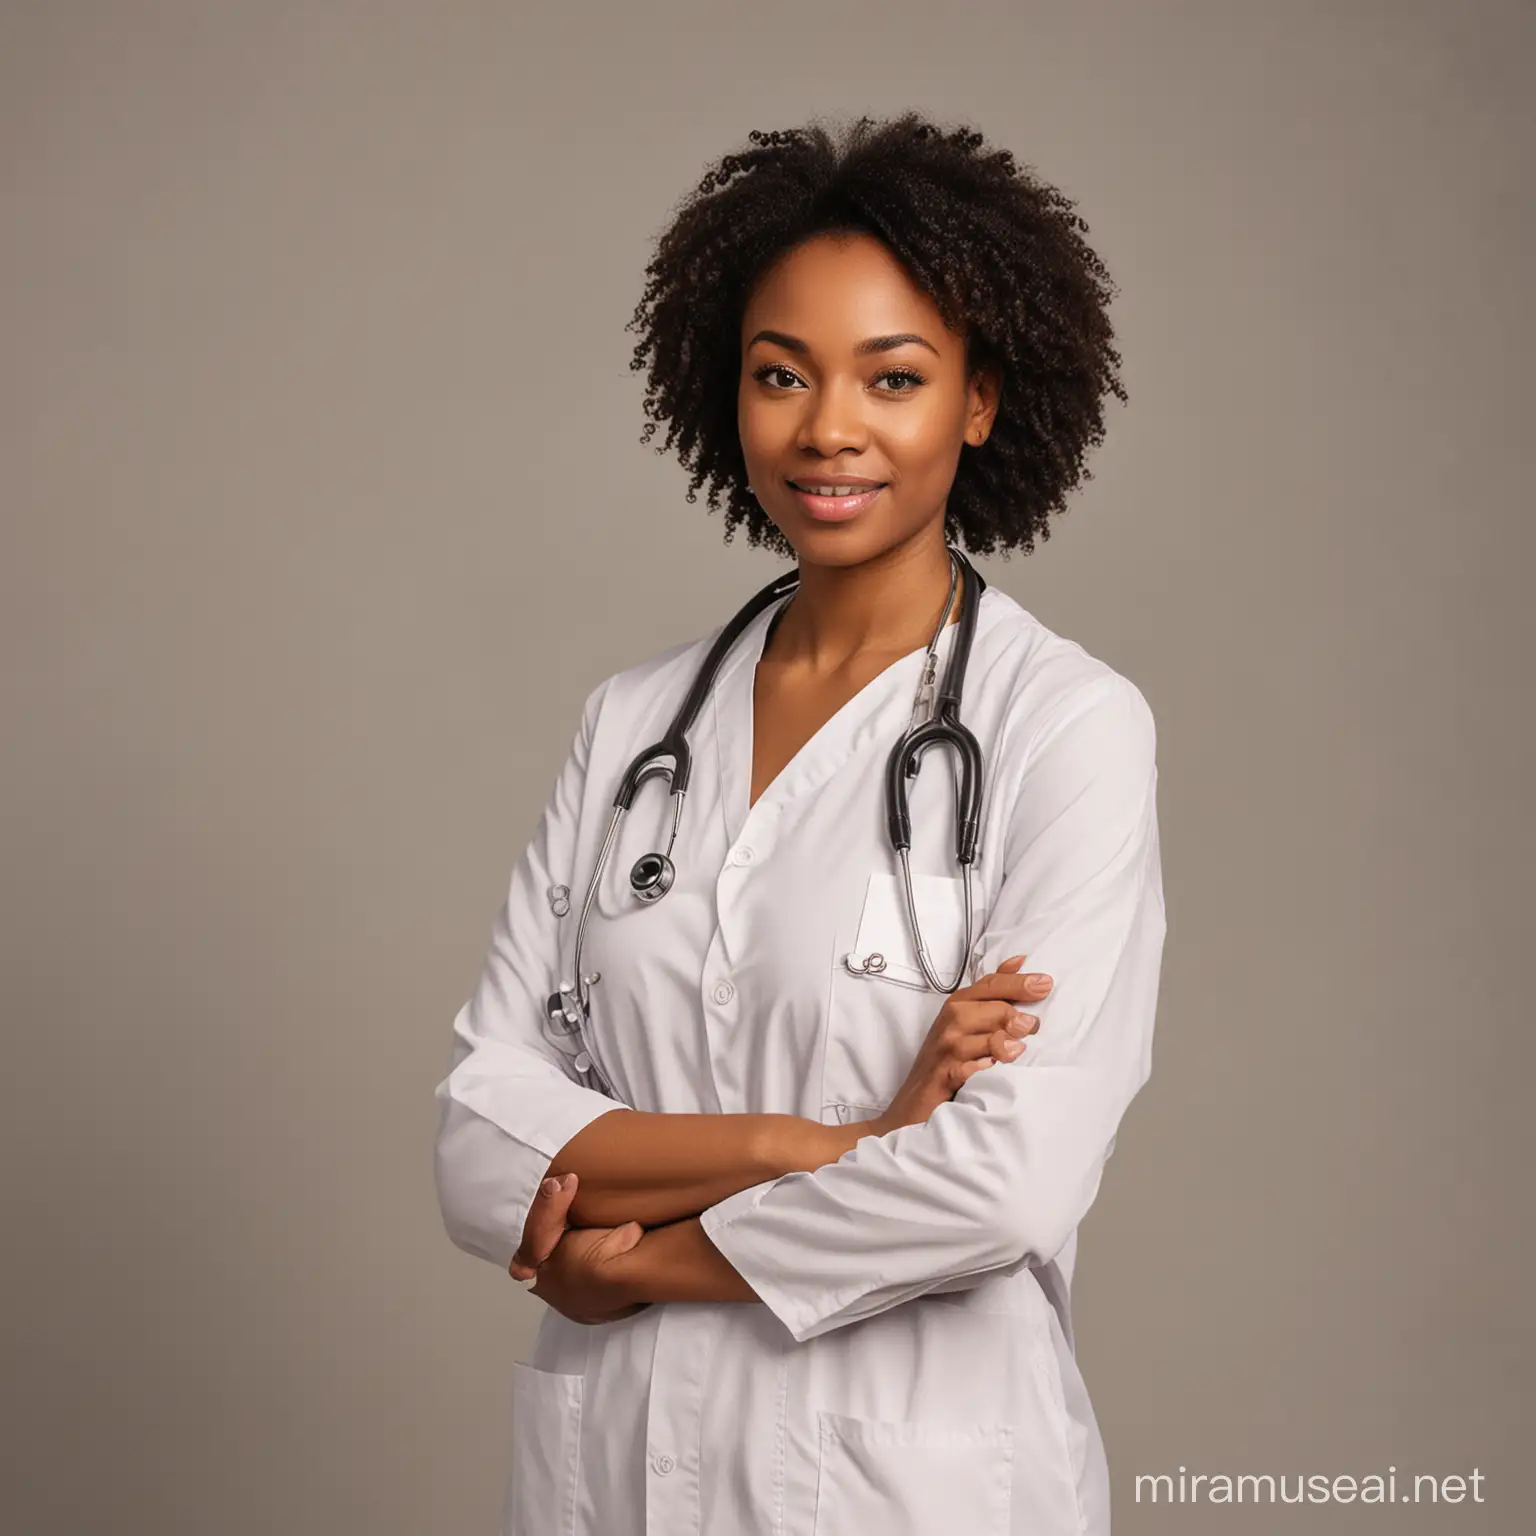 doctor Afro americain debout avec stetoscope
